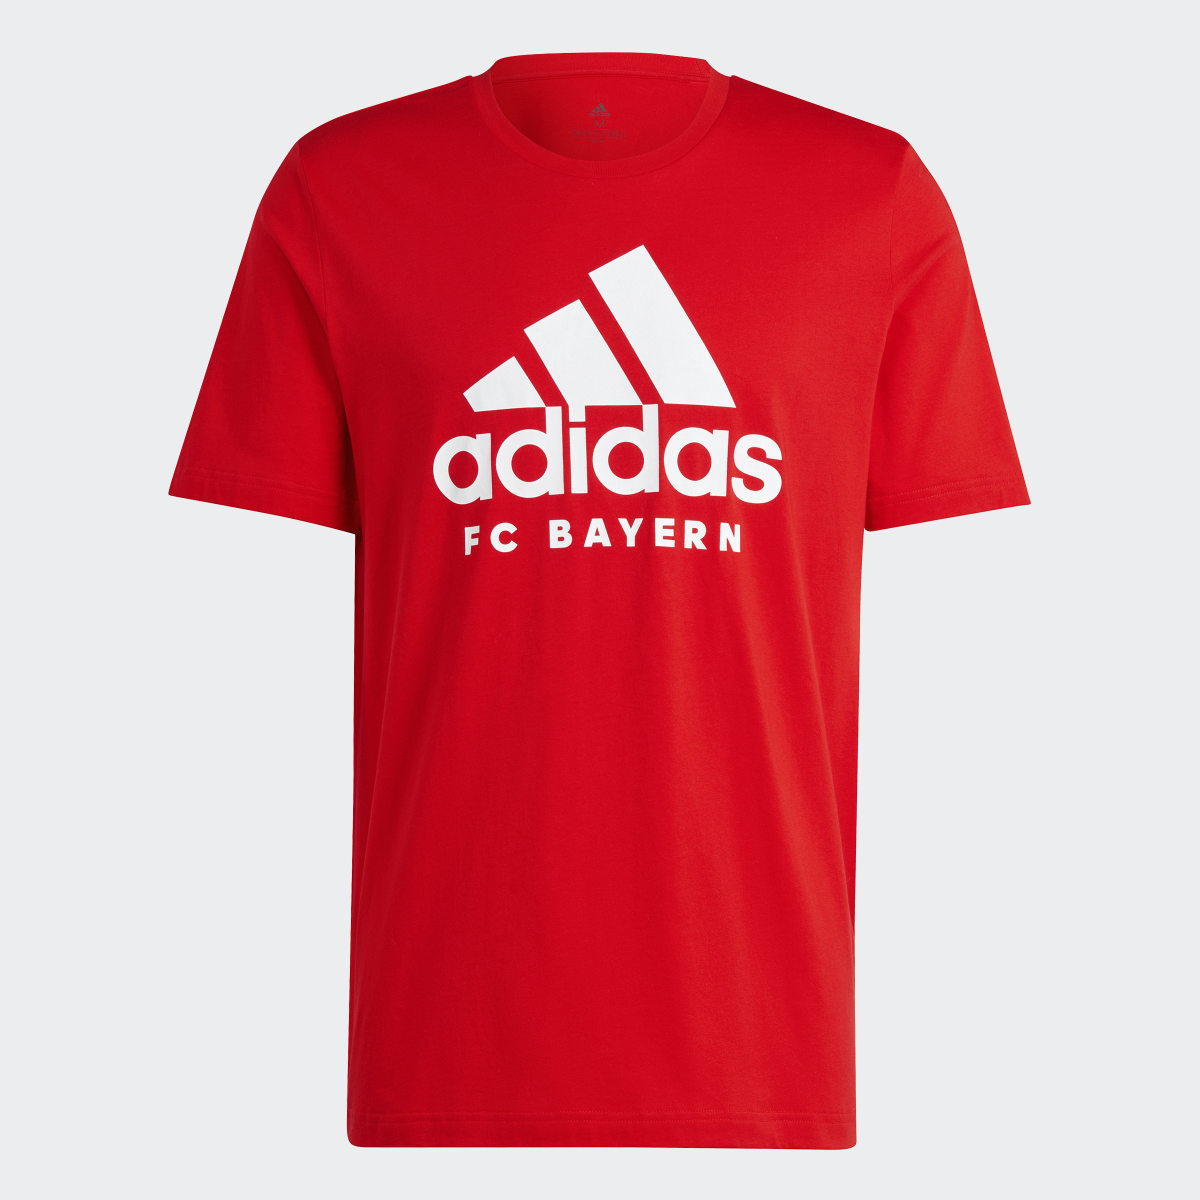 Adidas FC Bayern München DNA Graphic T-Shirt. 5